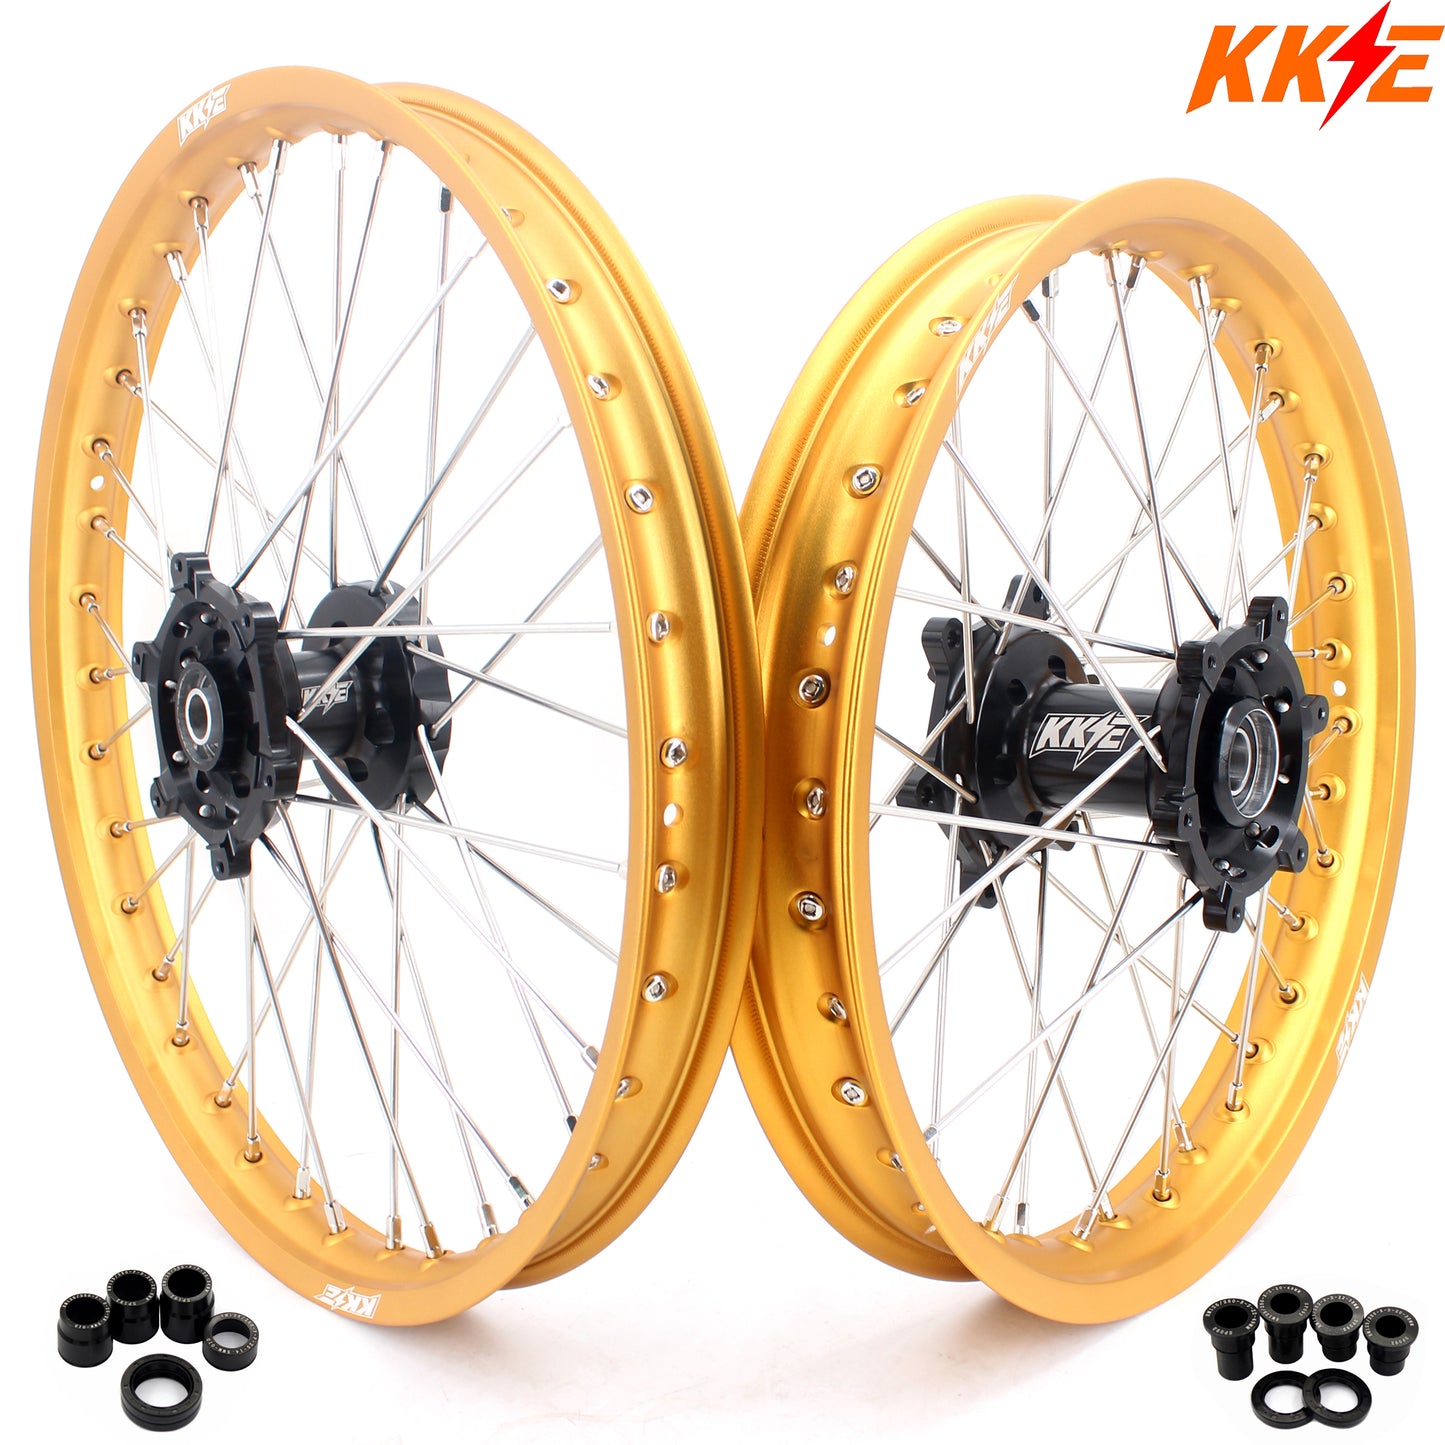 KKE 21 & 19 Dirt Bike Gold Rims for Suzuki RM125 2001-2007 RM250 2008